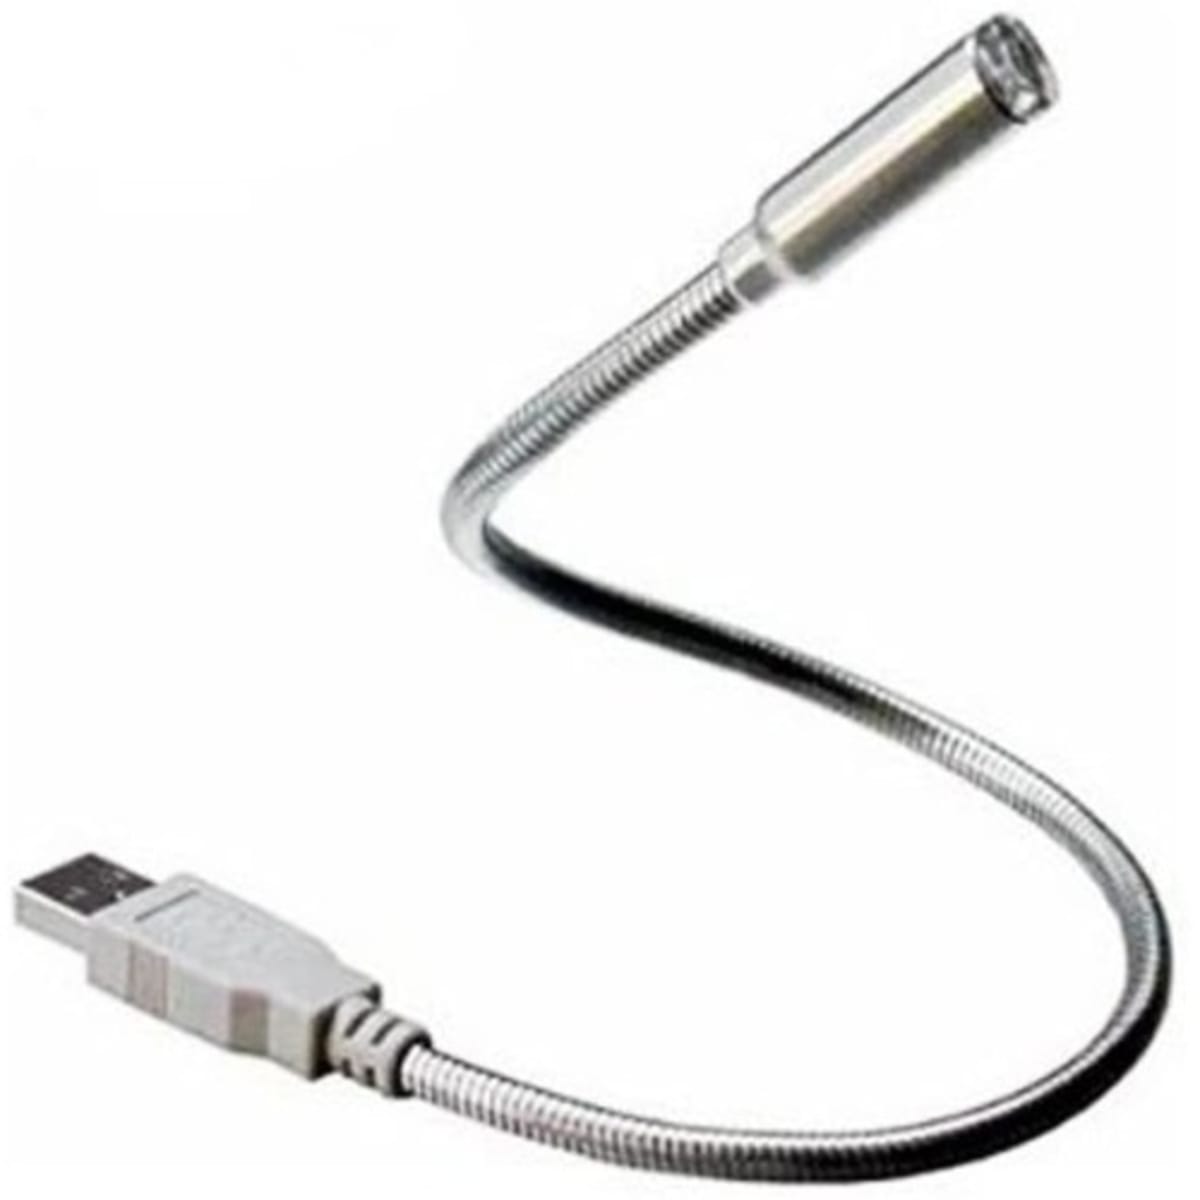 Flexible Bendable Mini USB LED Lamp Light For Notebook, Laptop